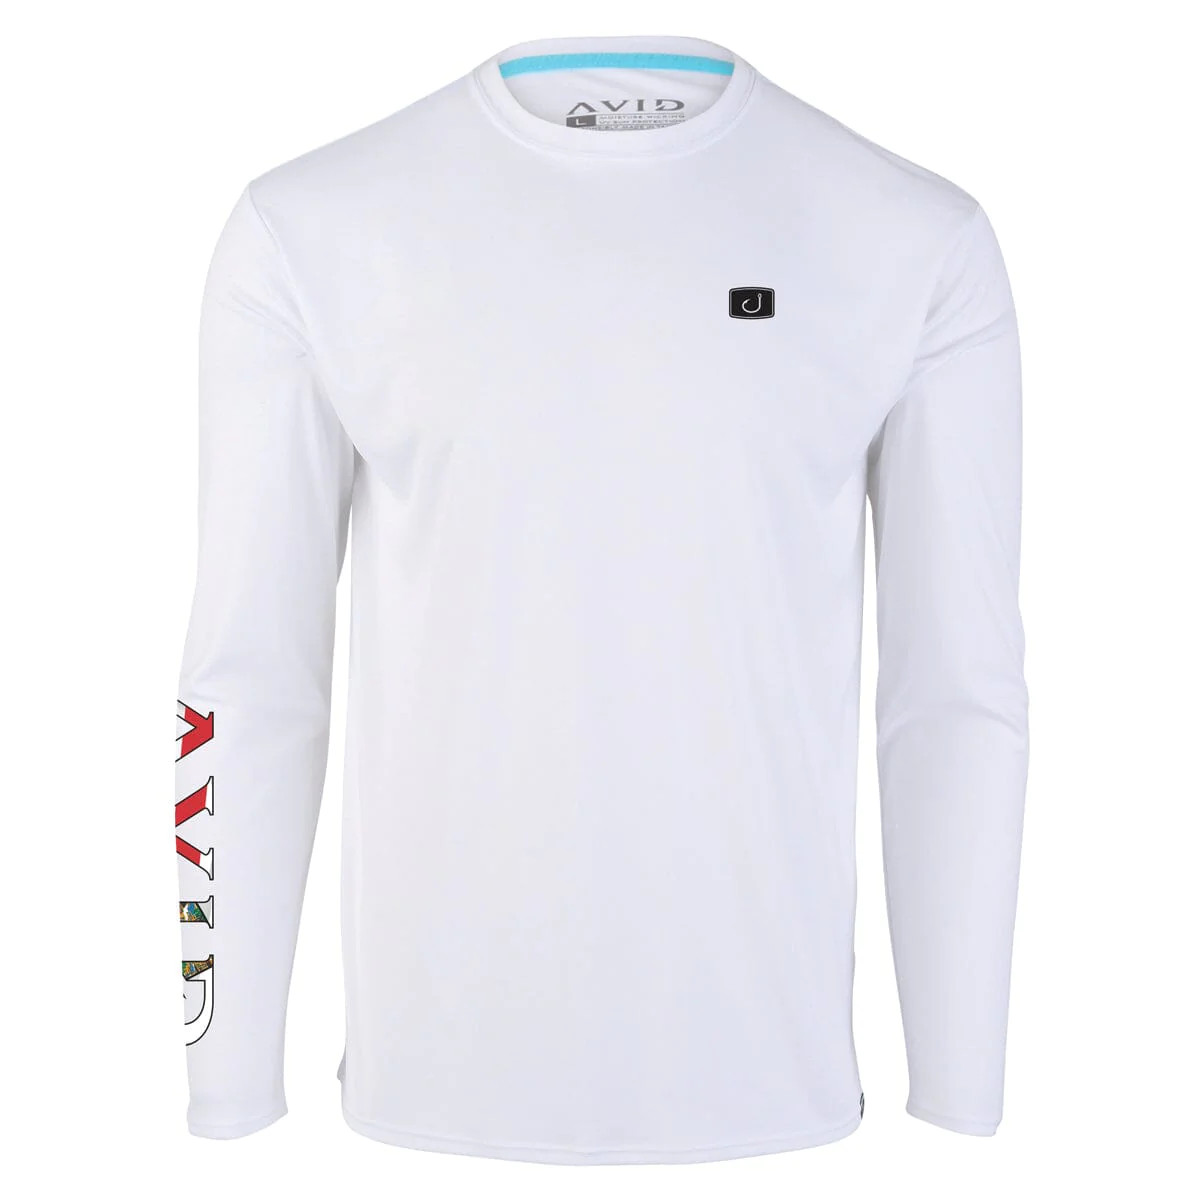 AVID Florida Native AVIDry Long Sleeve Performance Shirt (Men's) - White Front